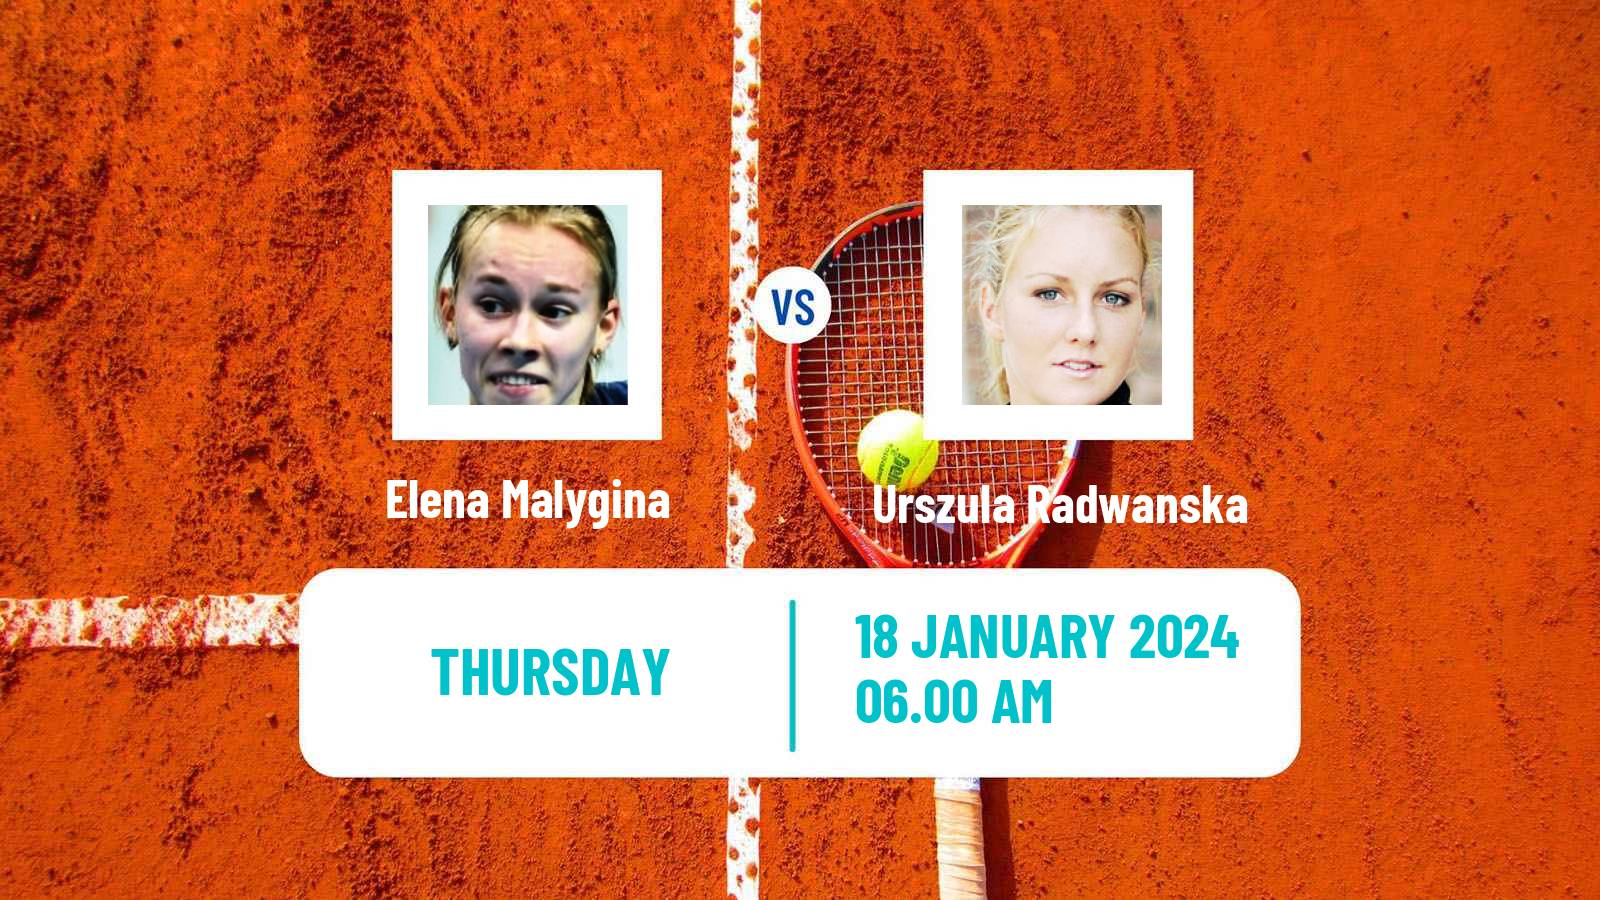 Tennis ITF W35 Sunderland Women Elena Malygina - Urszula Radwanska